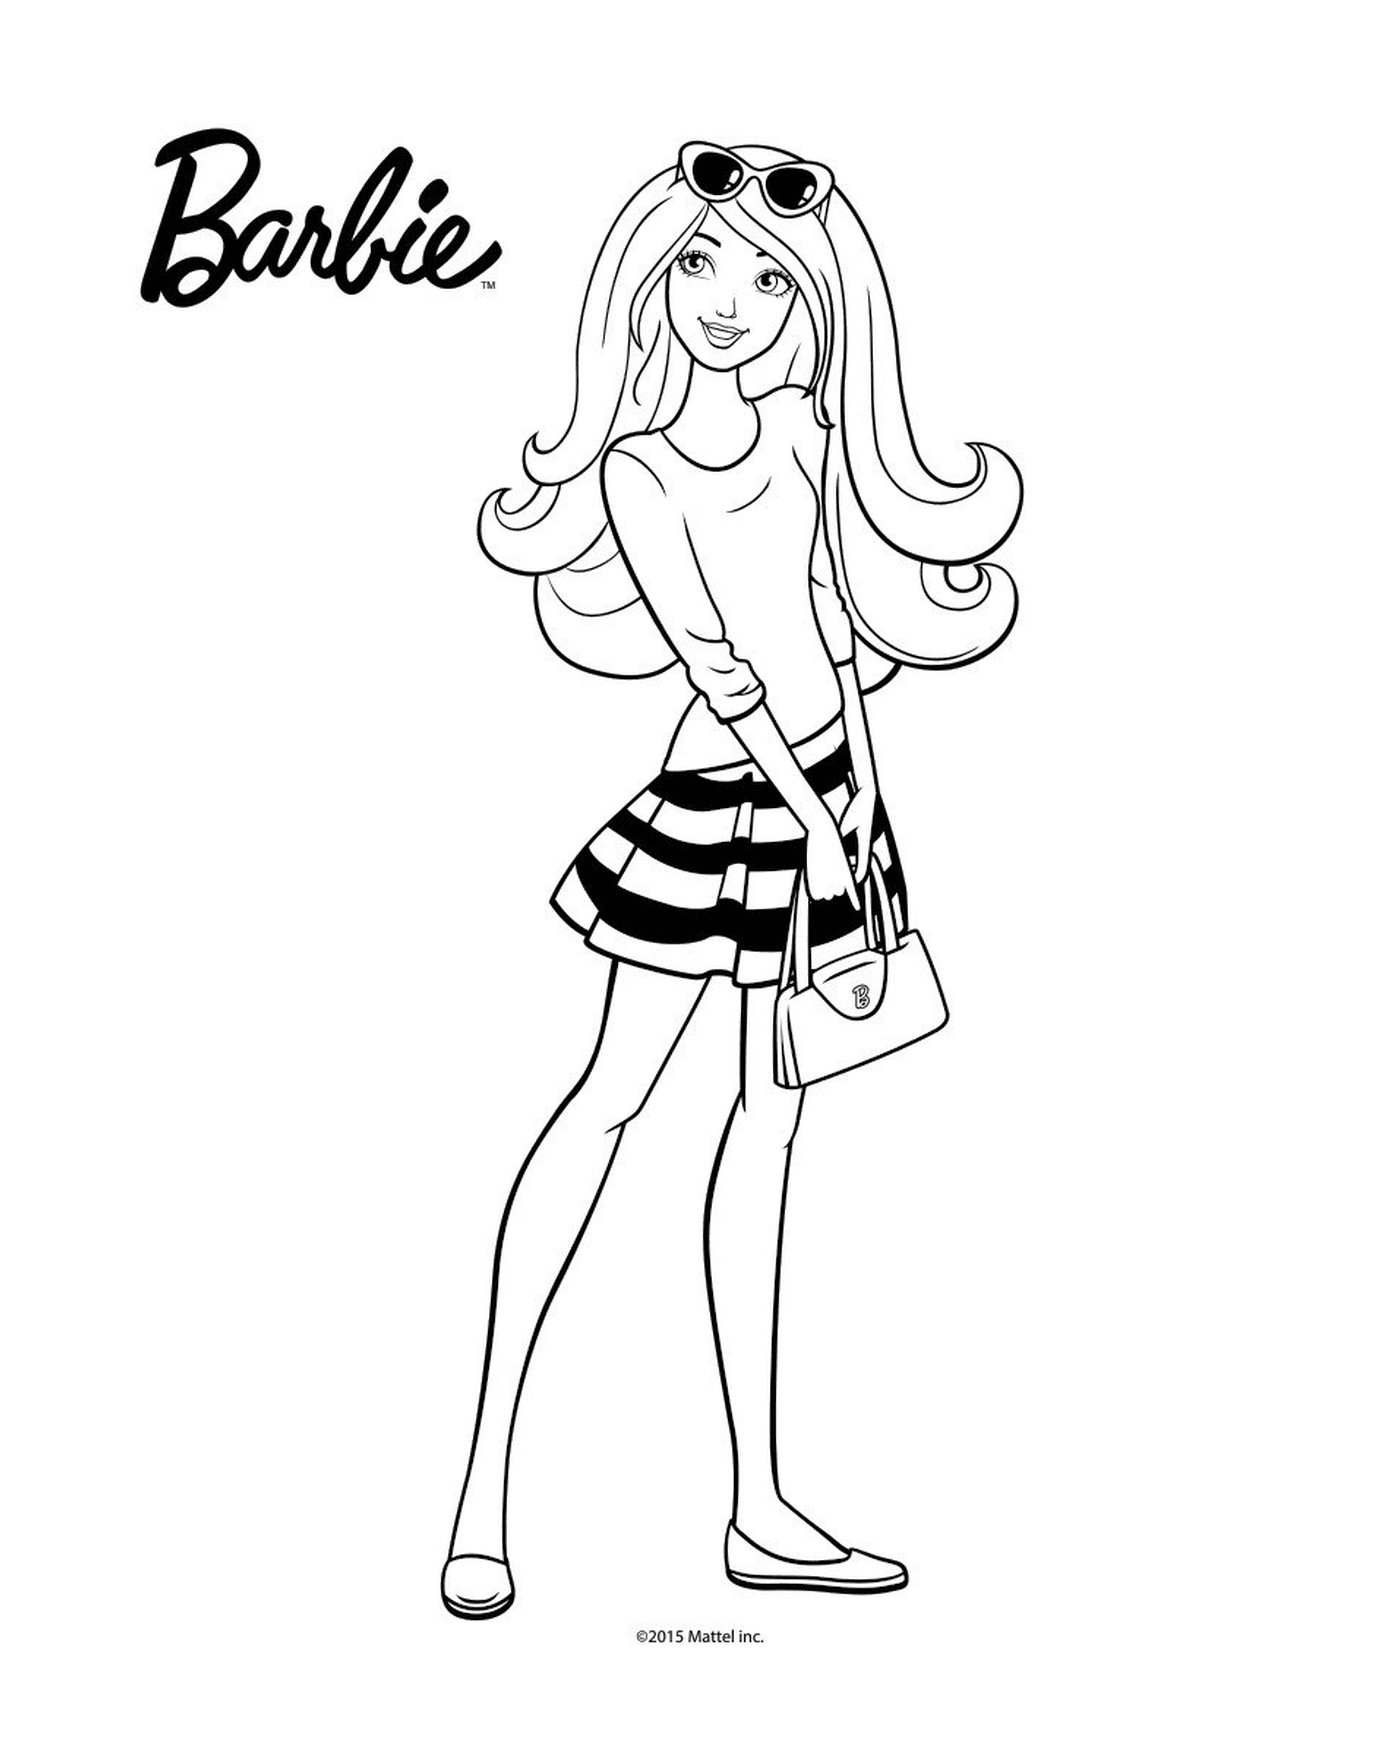  A Barbie doll 